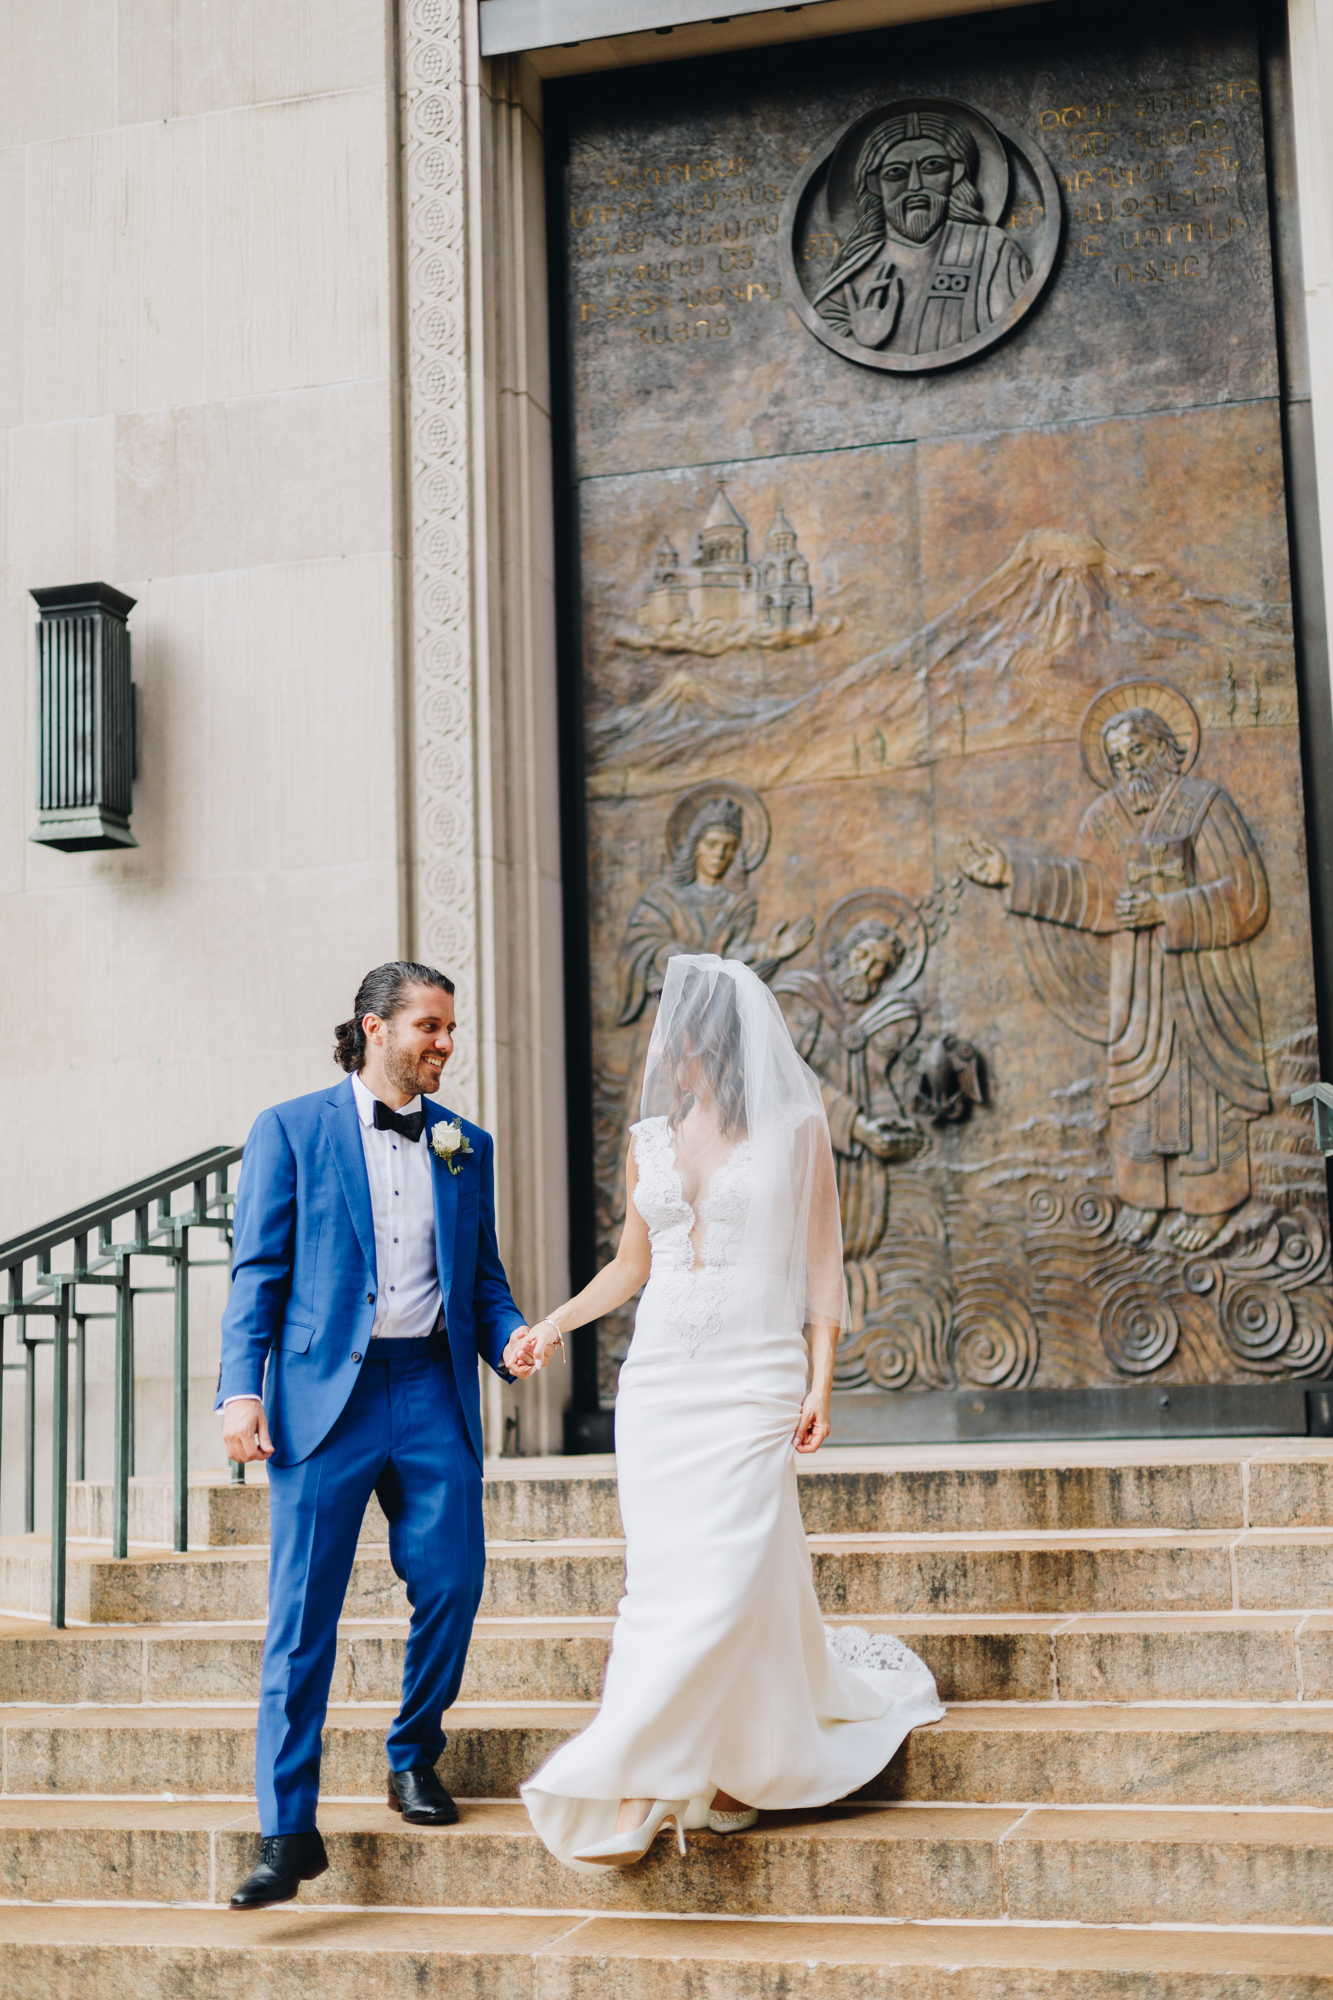 Beautiful wedding photos at Armenian Church in New York